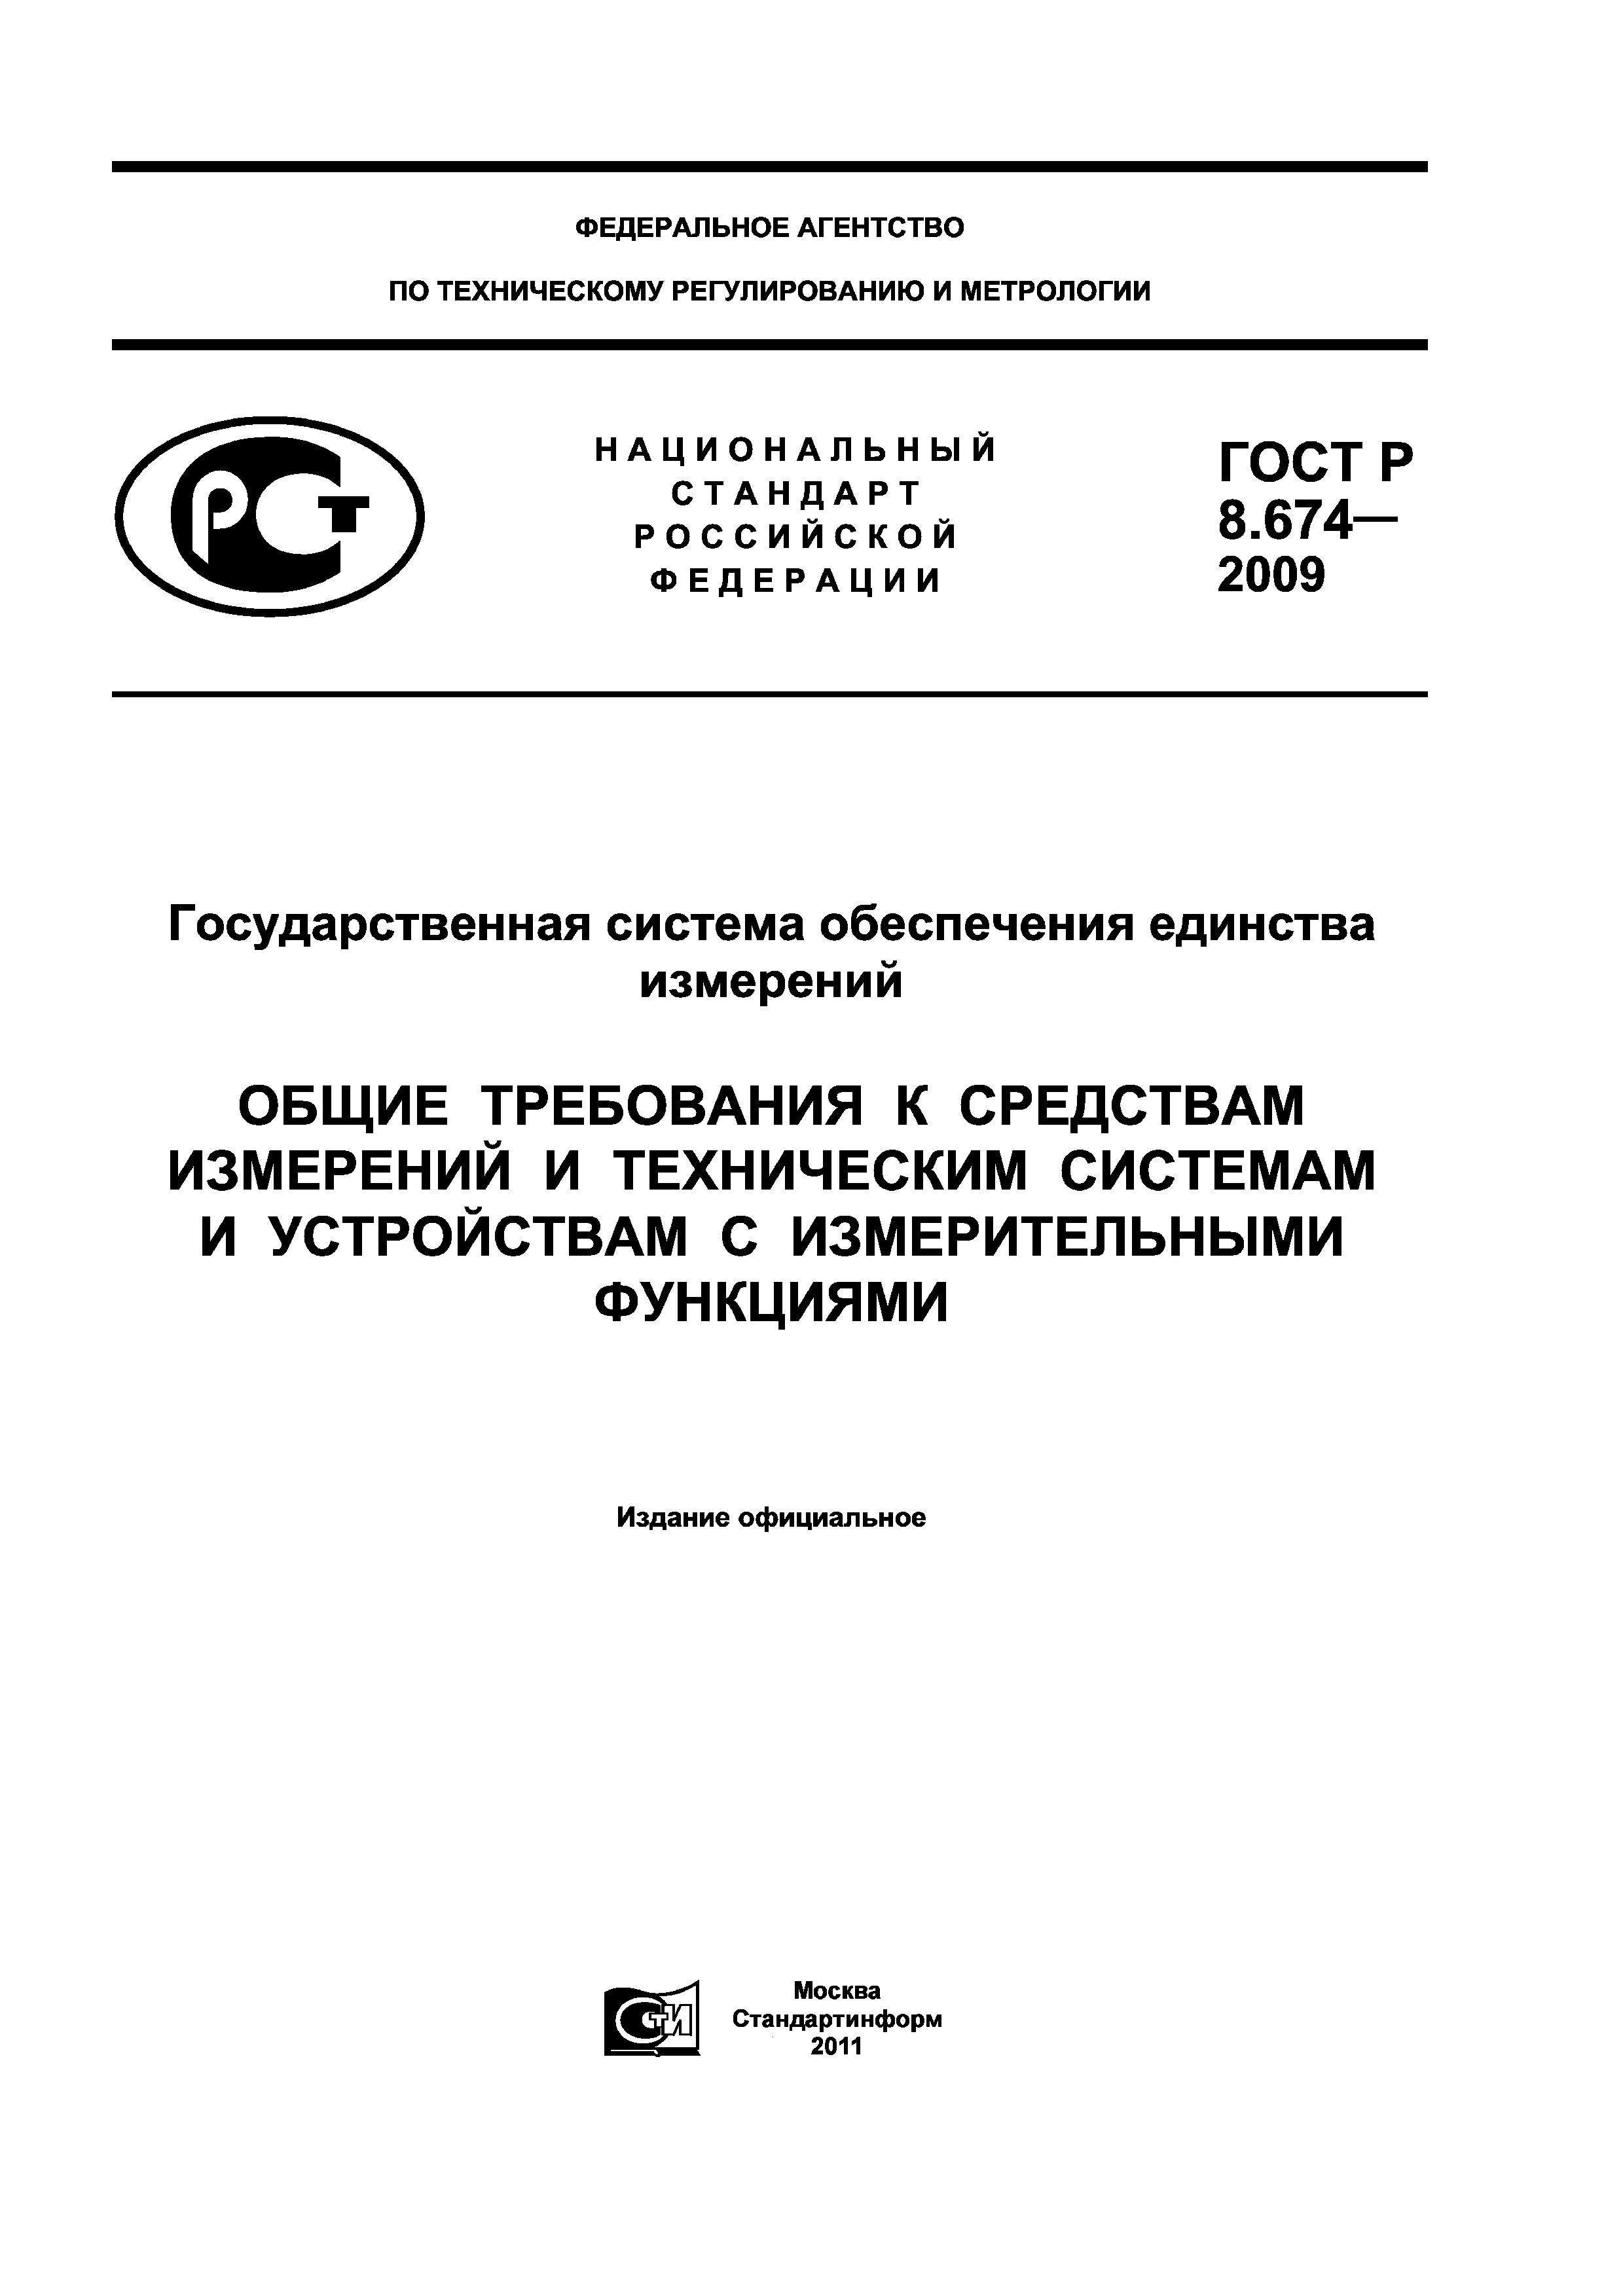 ГОСТ Р 8.674-2009